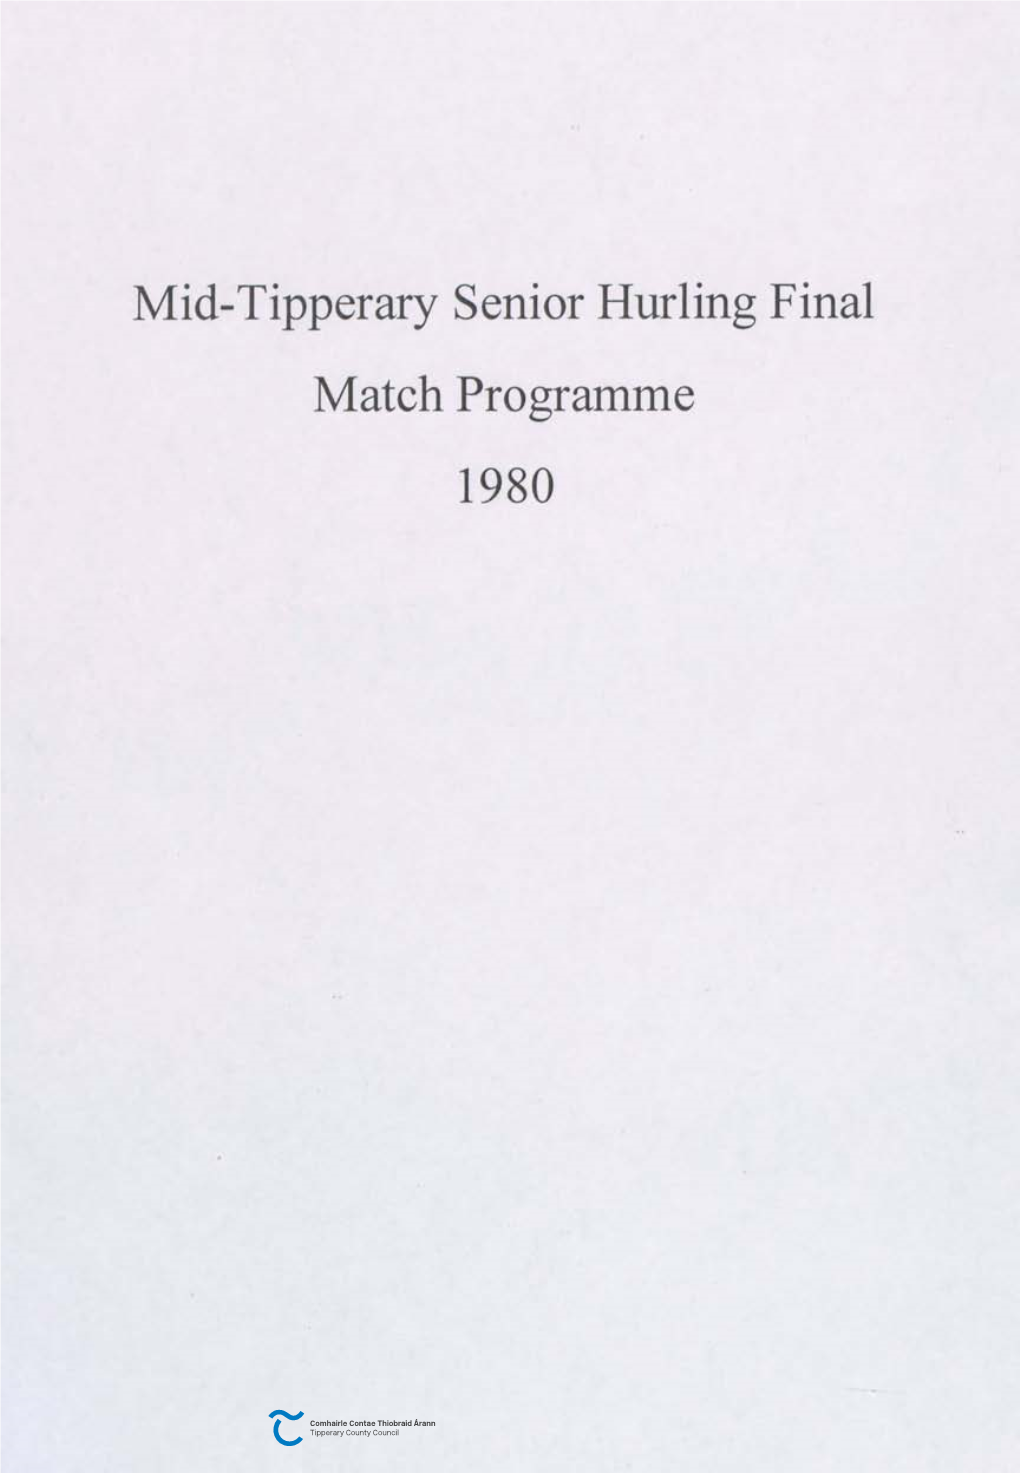 Mid-Tipperary Senior Hurling Final Match Programme 1980